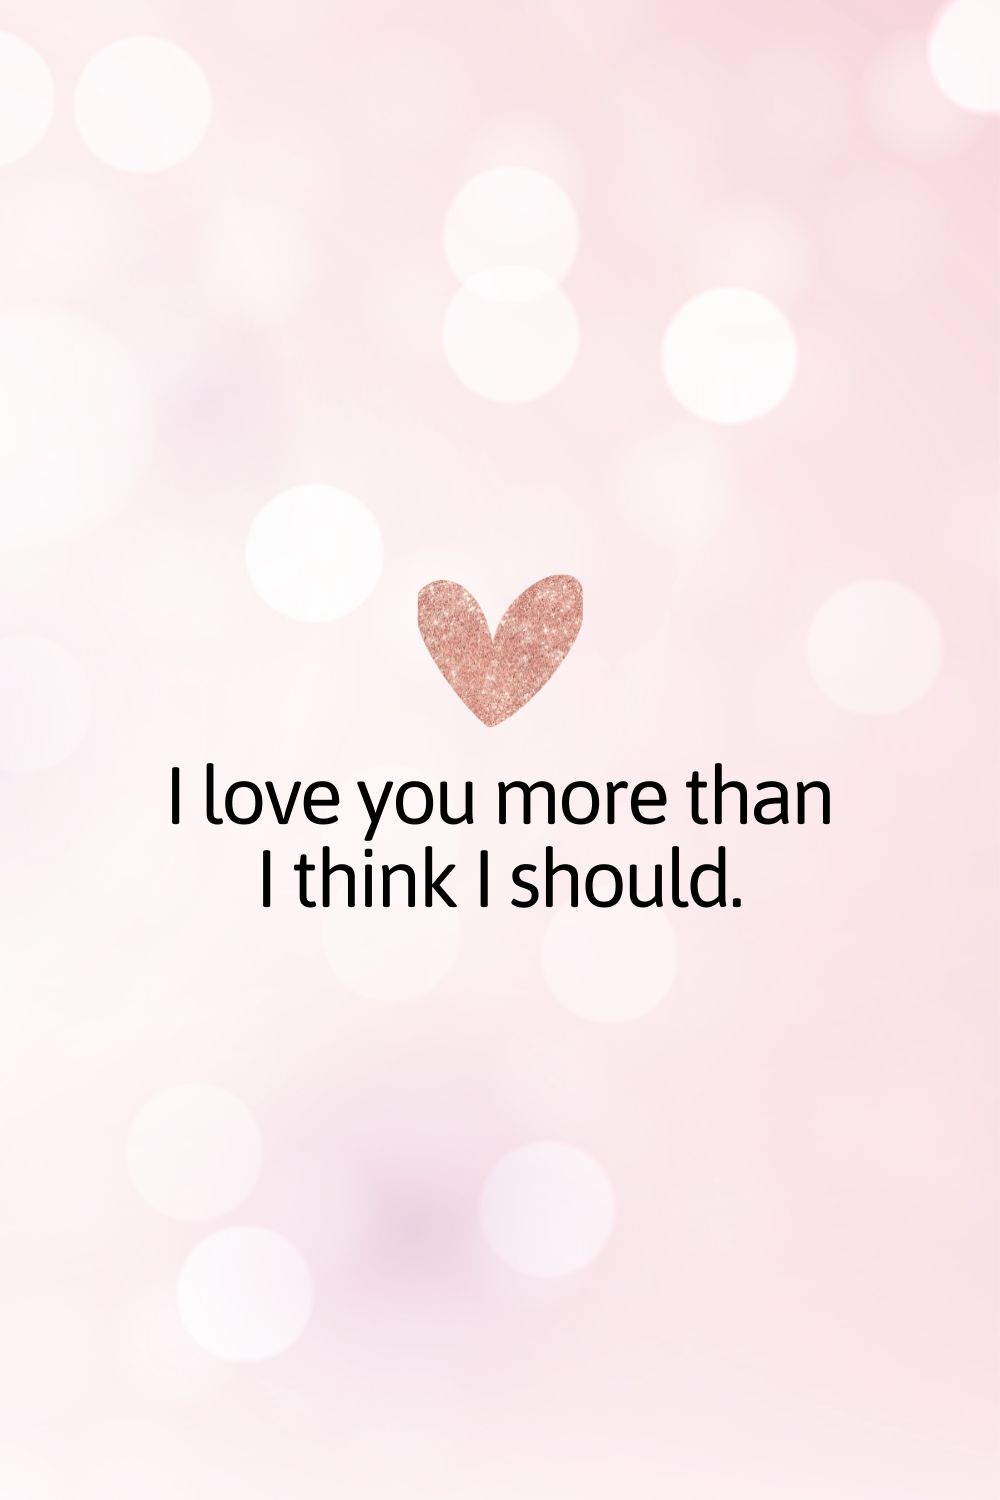 I love you more than I think I should.